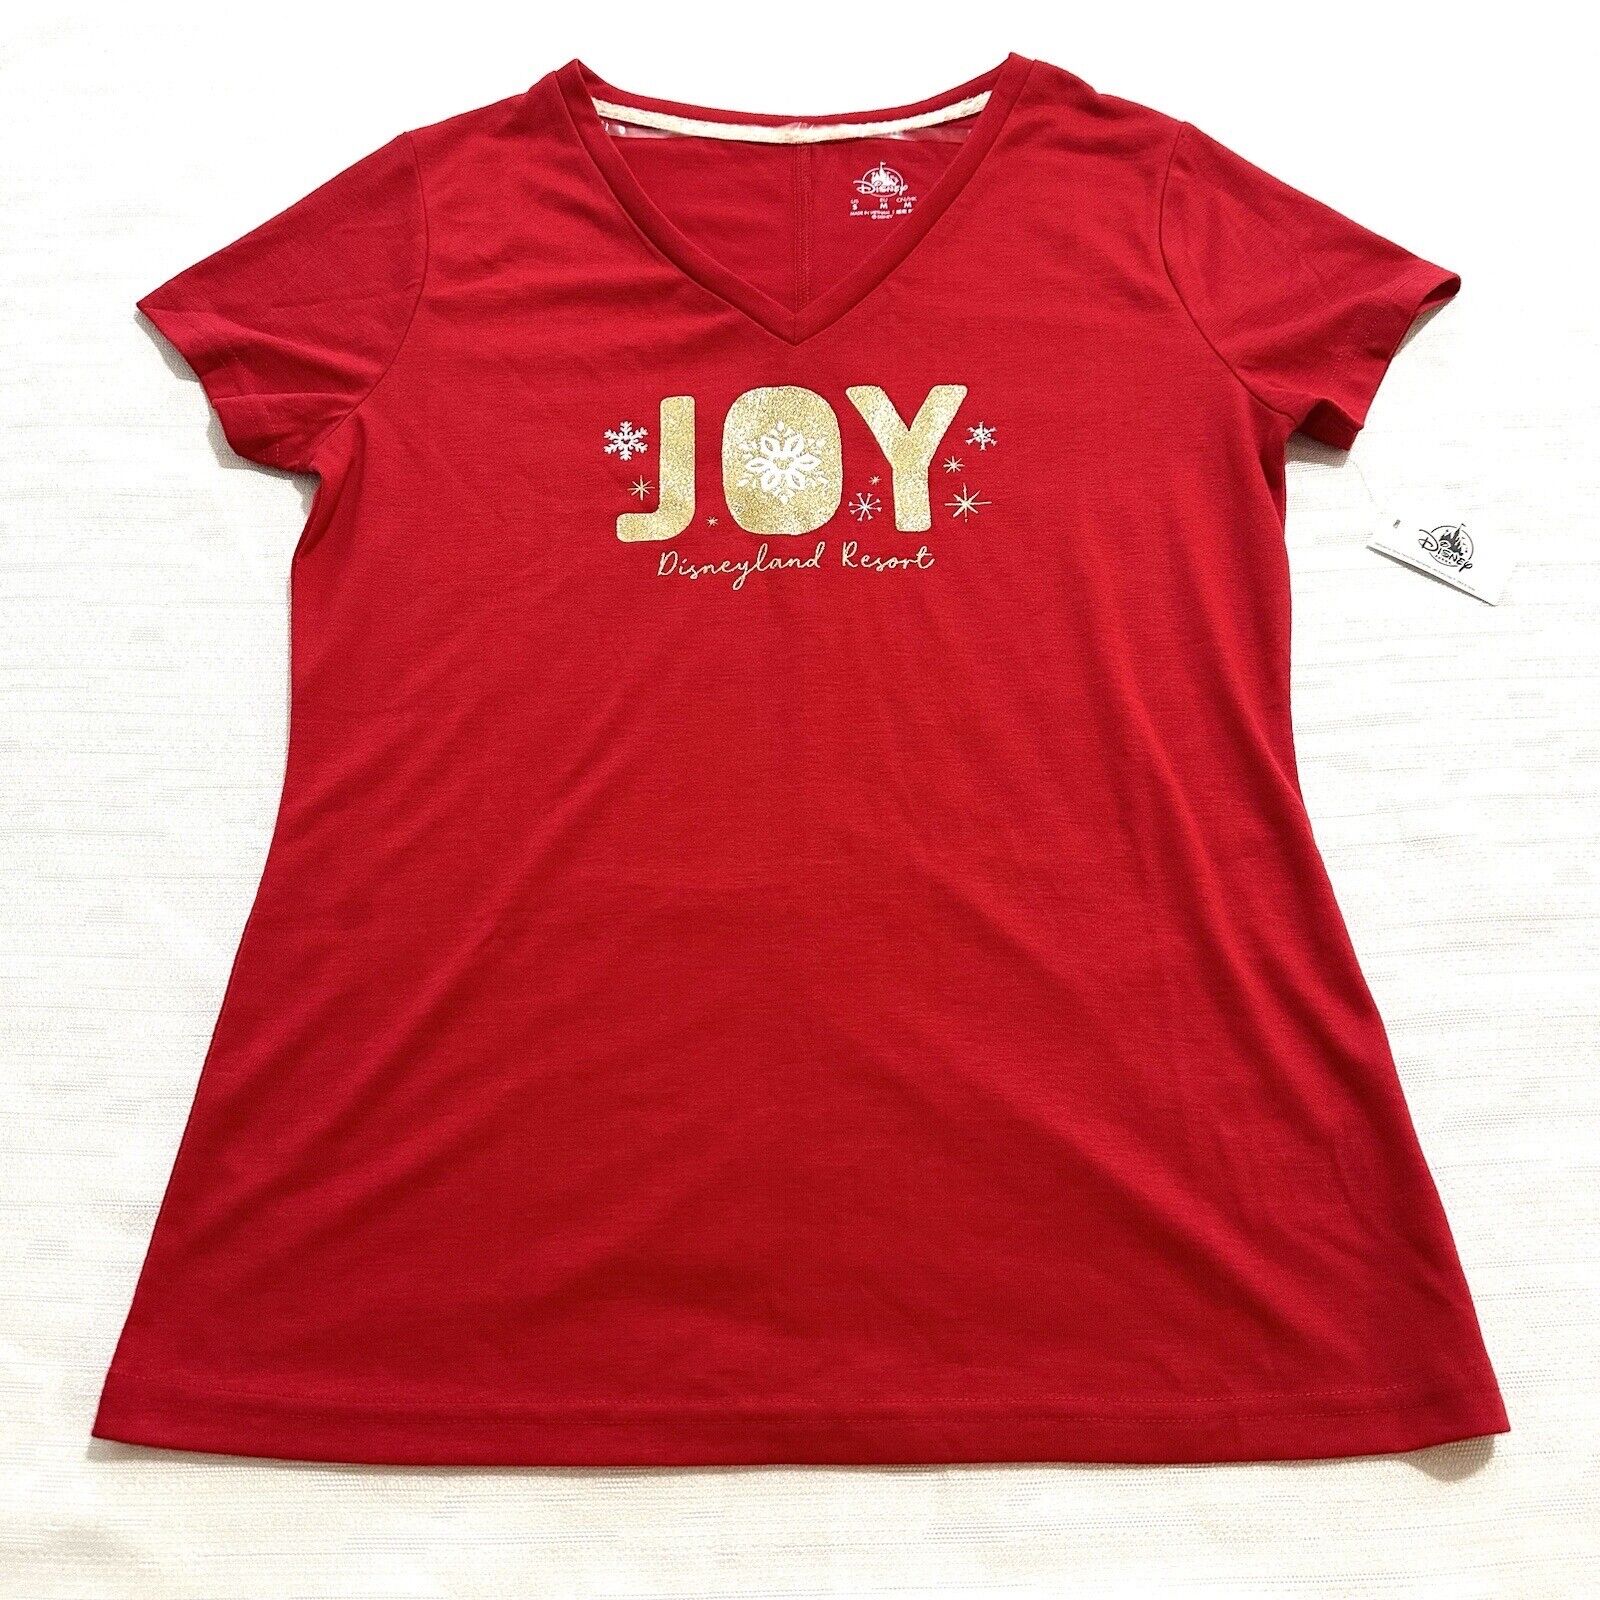 Disneyland Resort “JOY” Shirt Women’s Size Small Red Top NWT